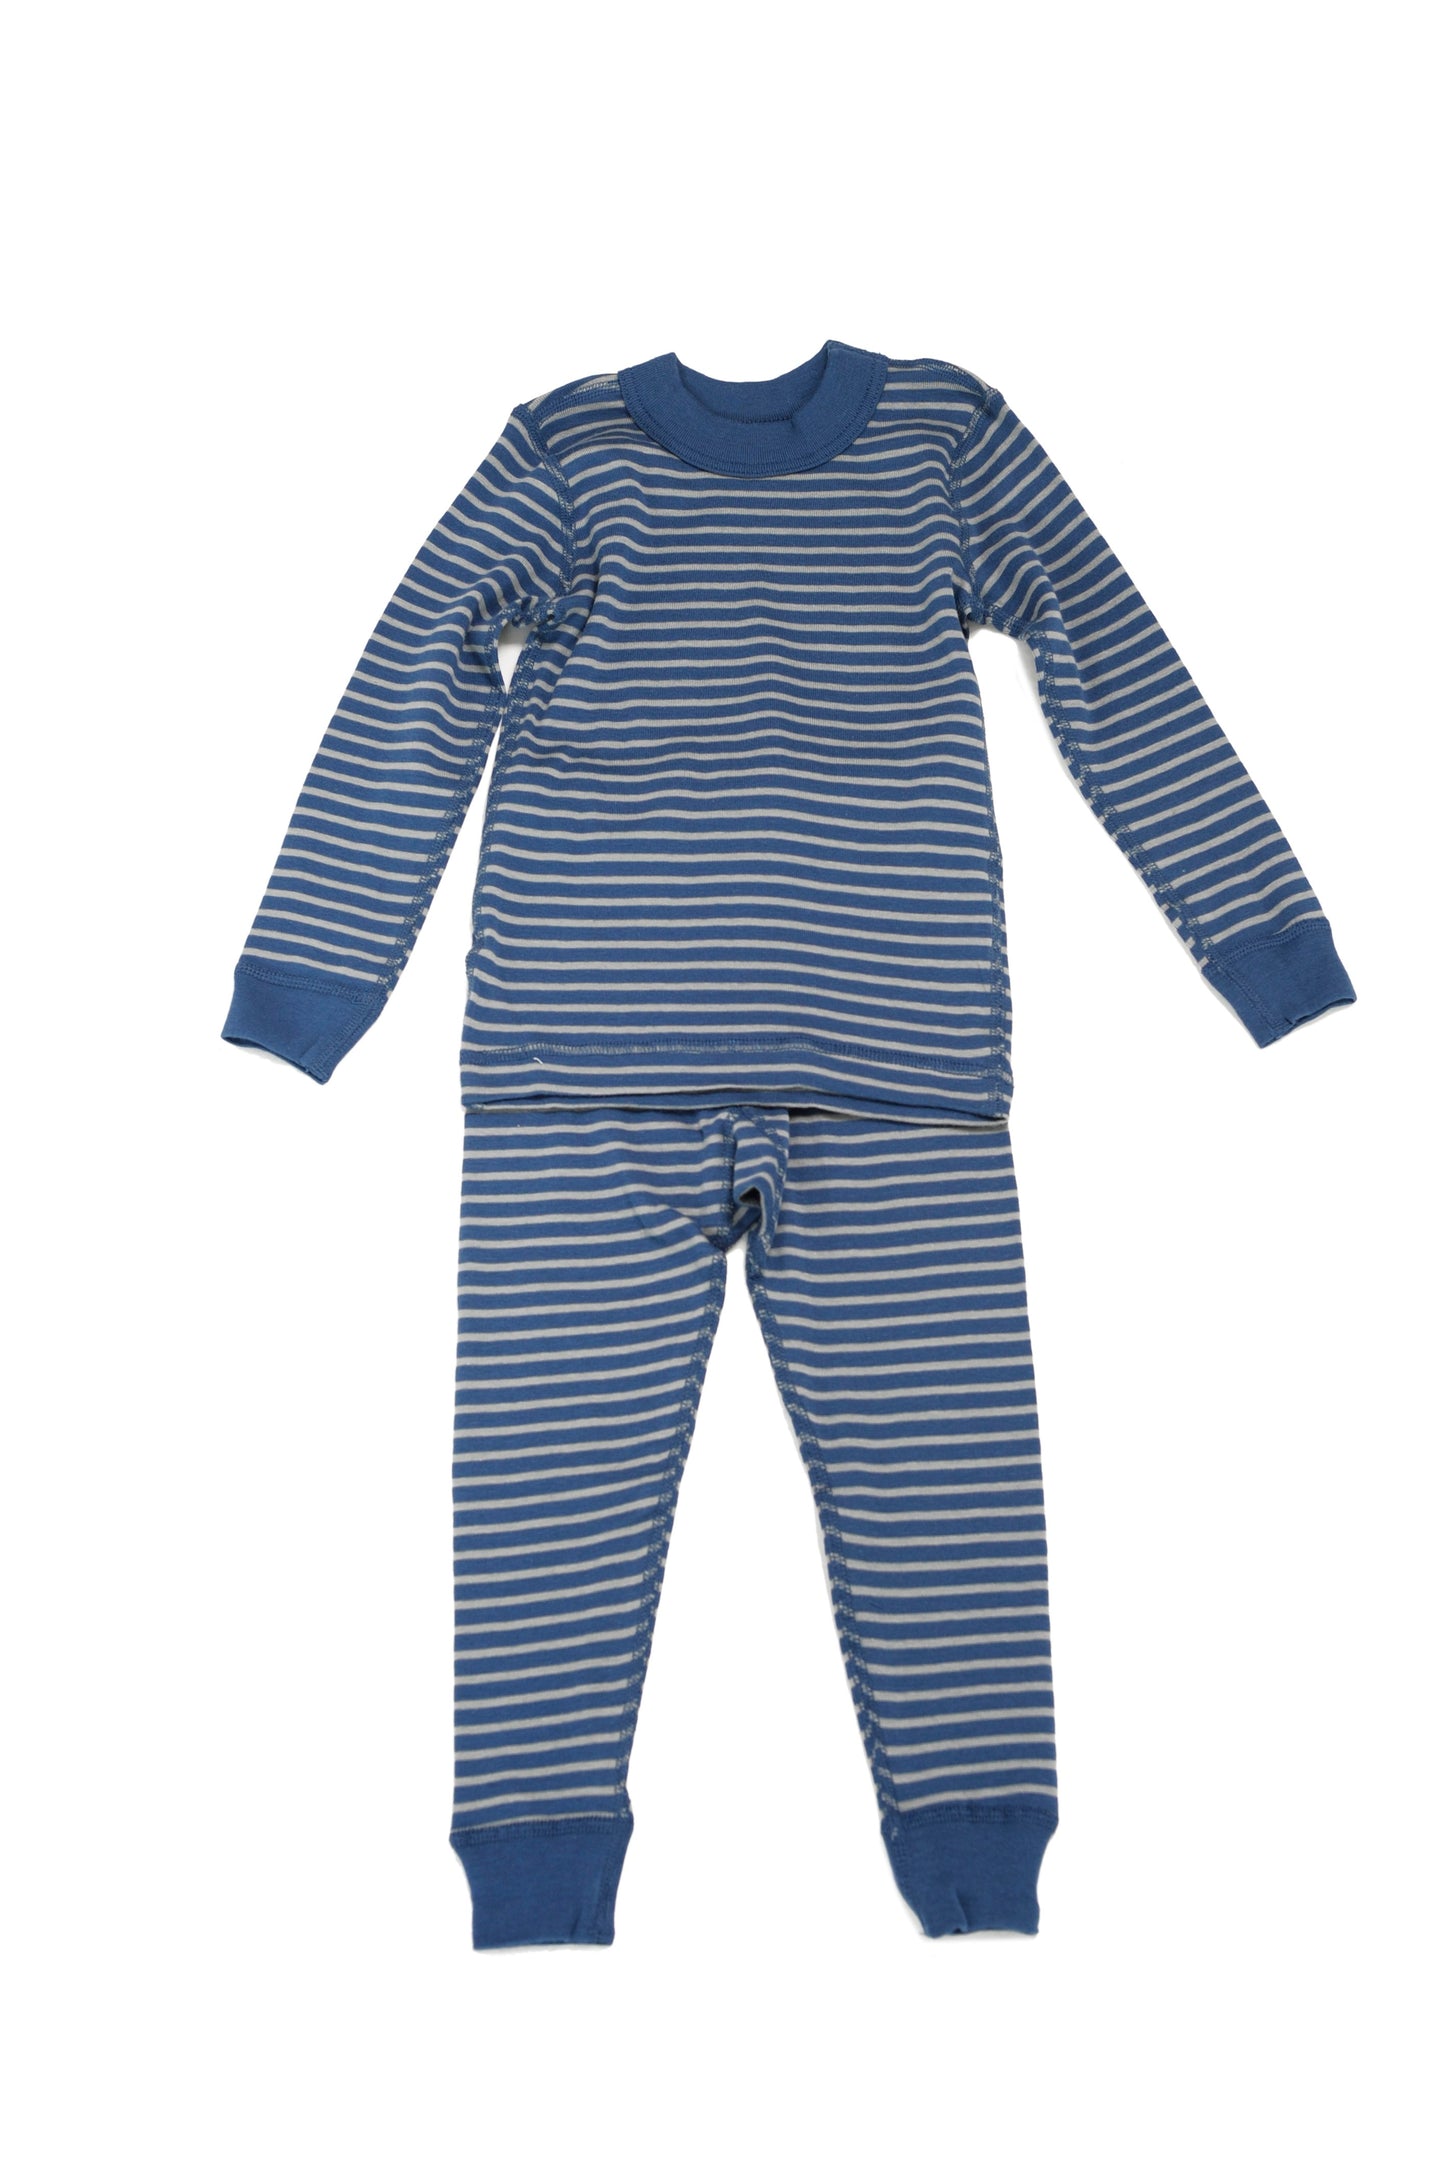 Blue and Gray Striped Pajama Set